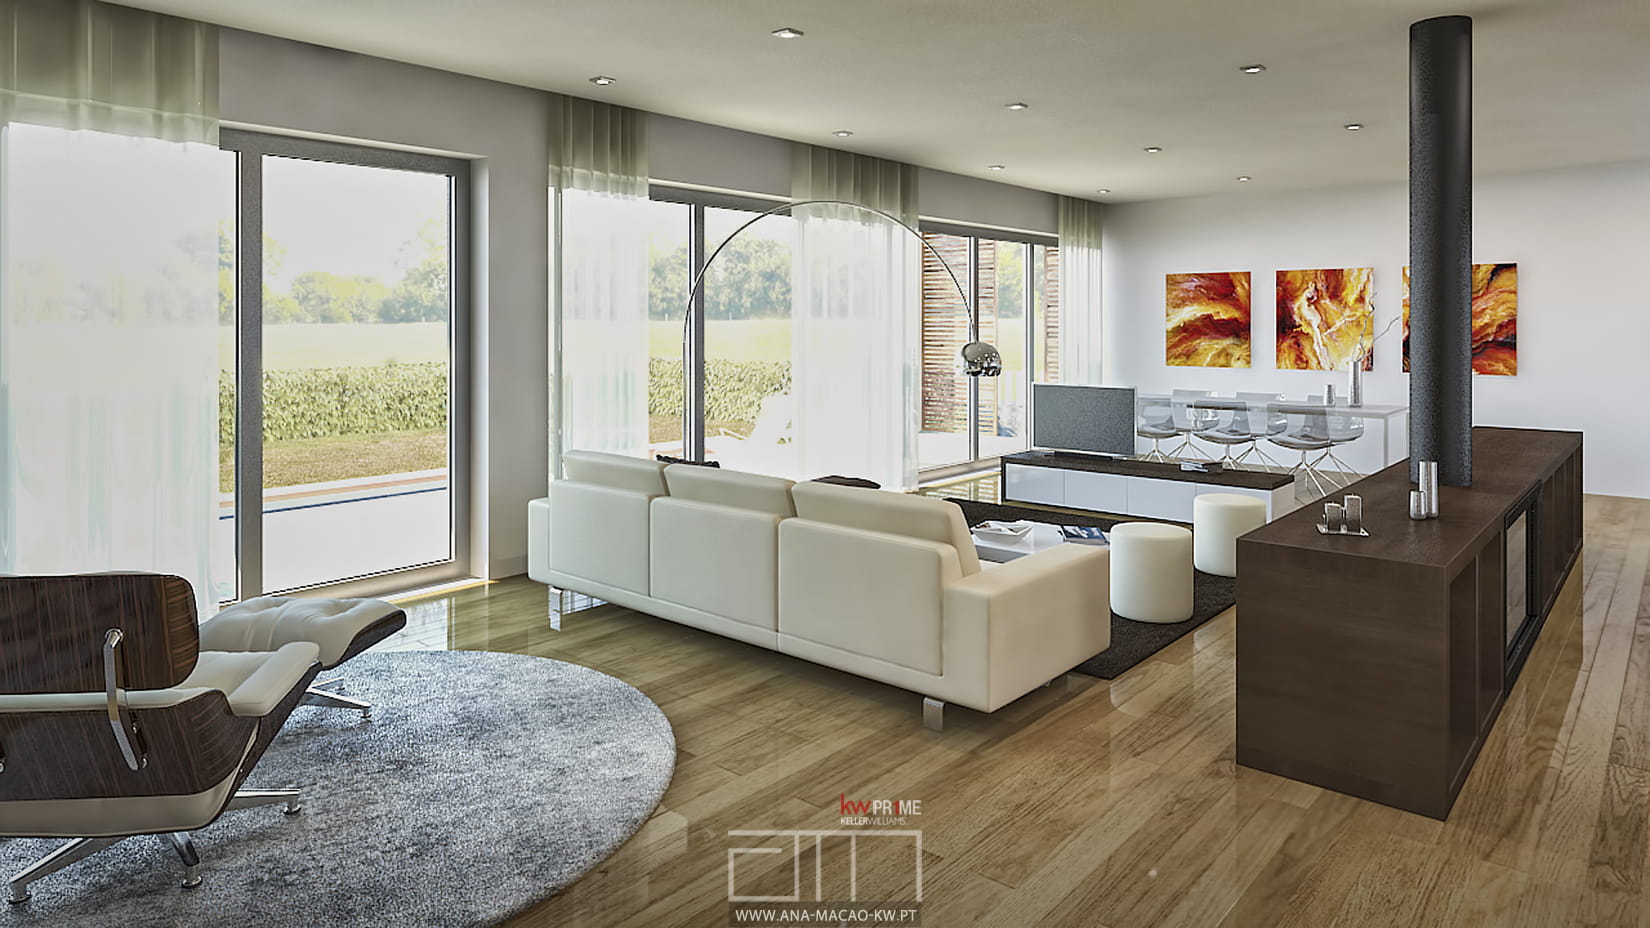 Architectural Design- Living Room